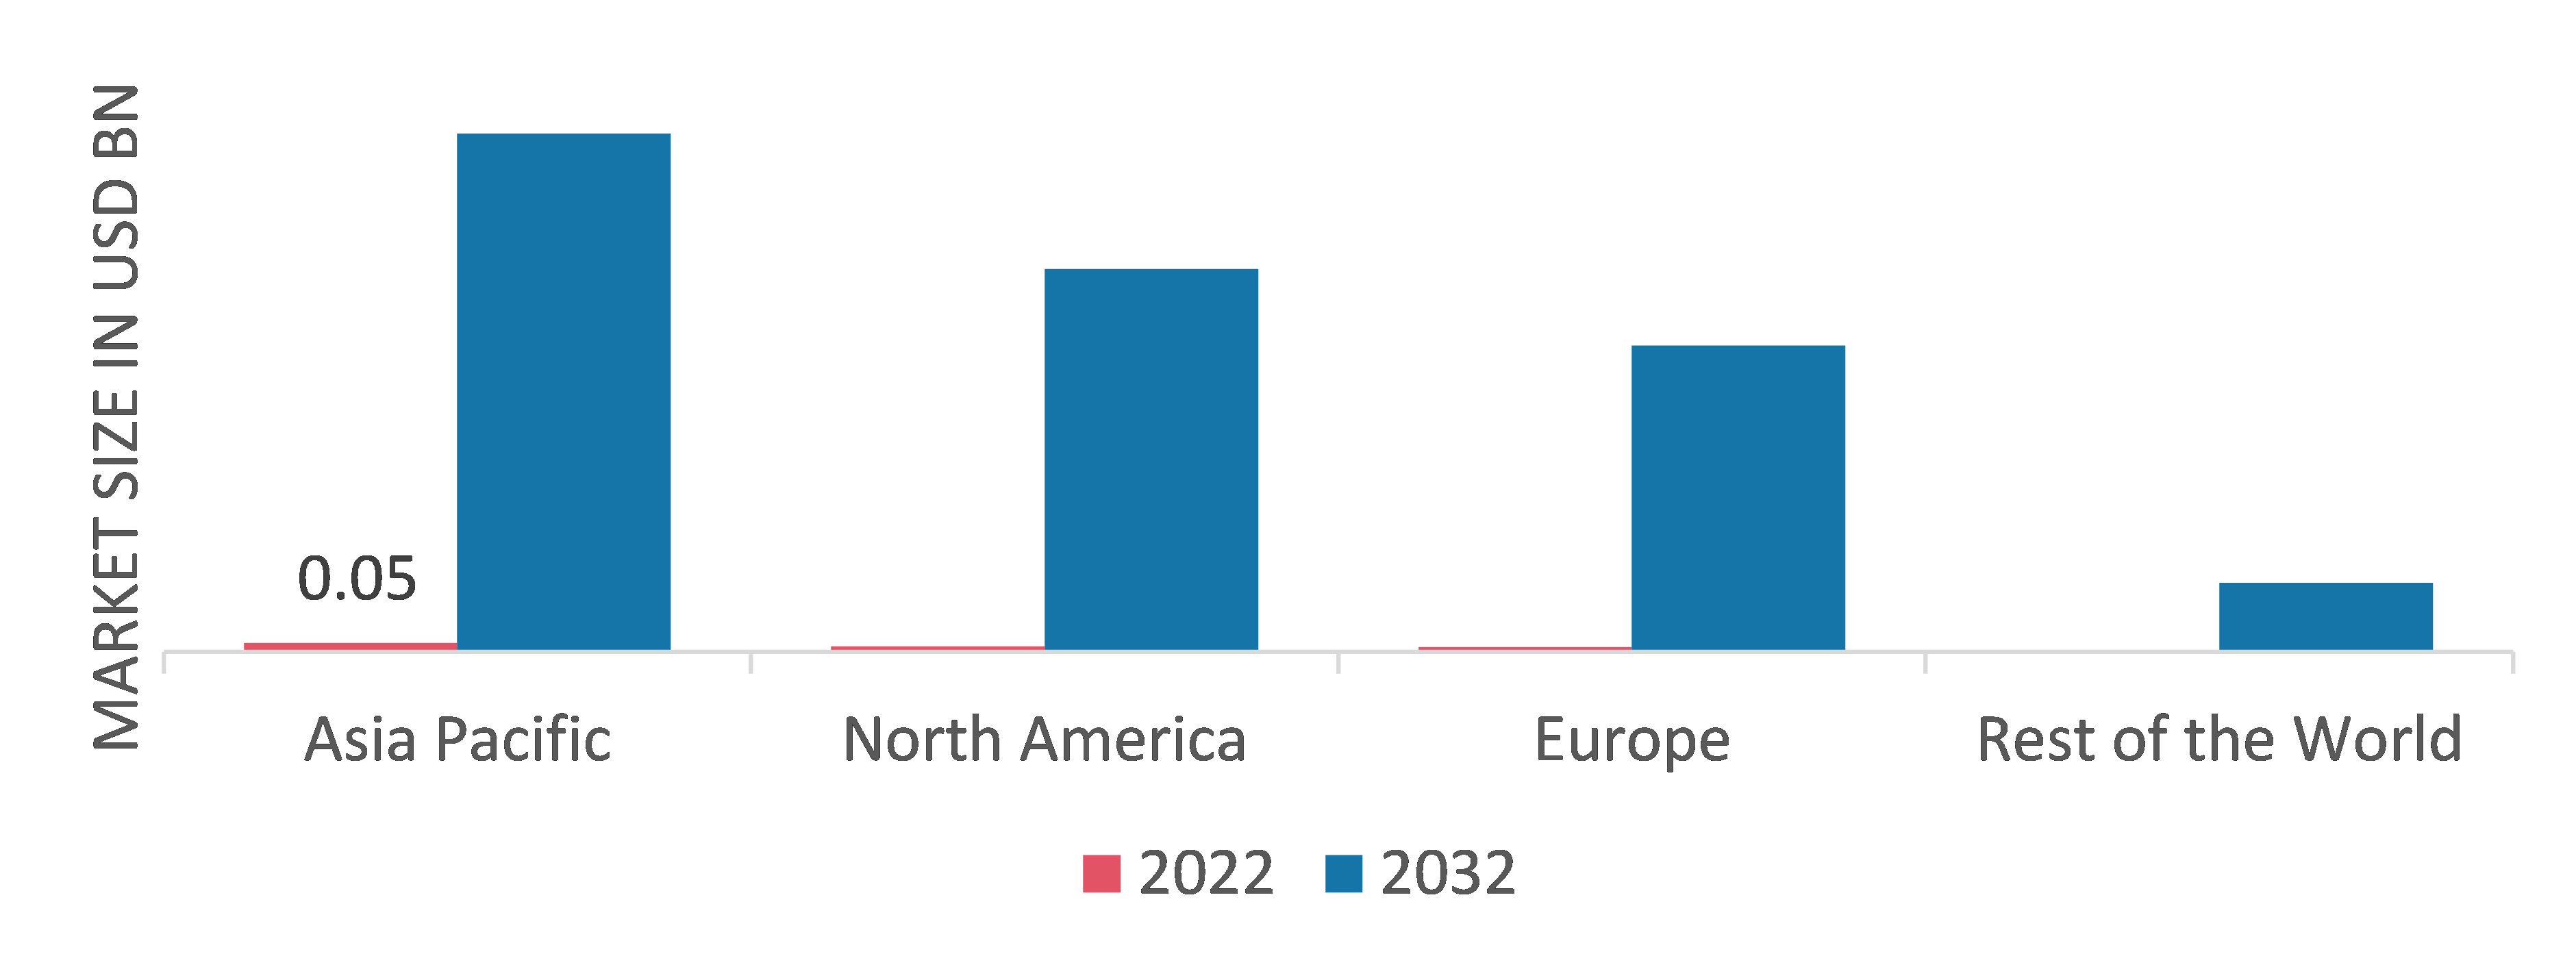 Fuel Cell Powertrain Market Share By Region 2022